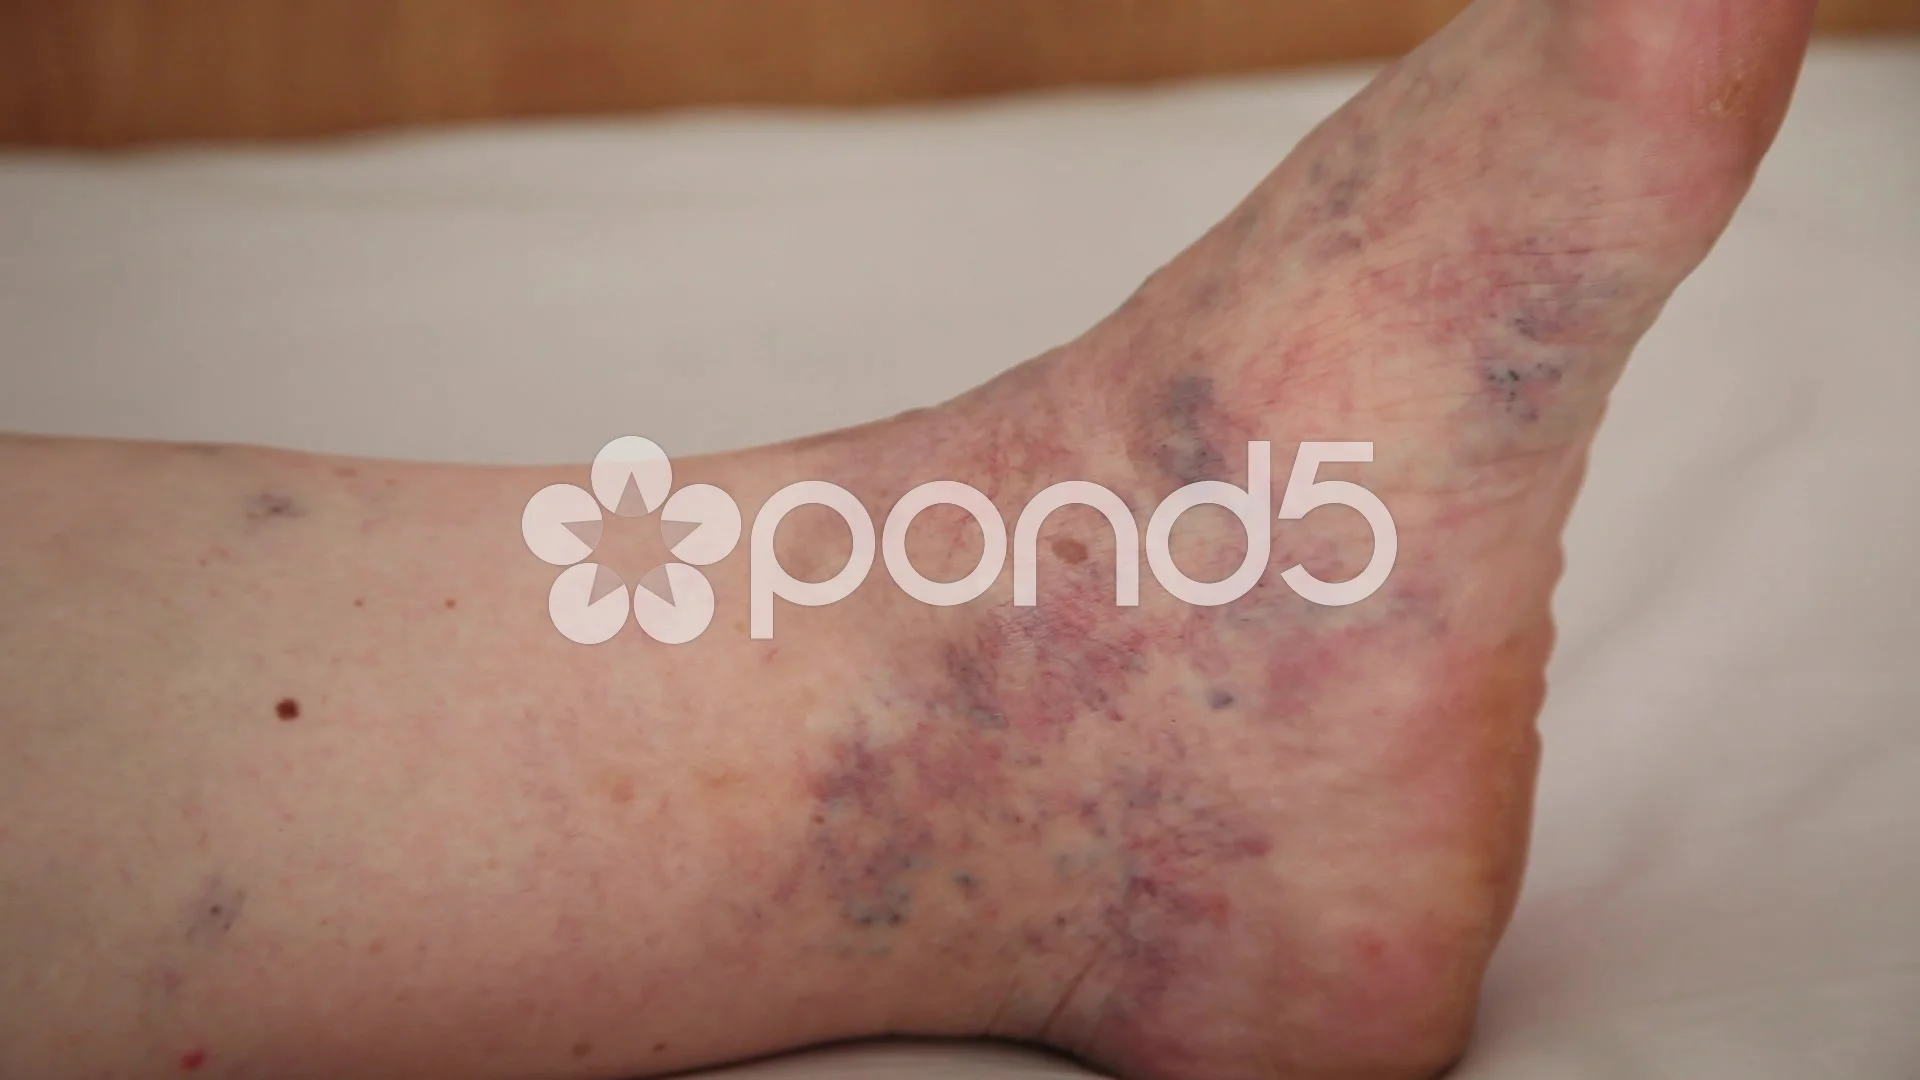 https://images.pond5.com/varicose-veins-leg-old-skin-041269009_prevstill.jpeg